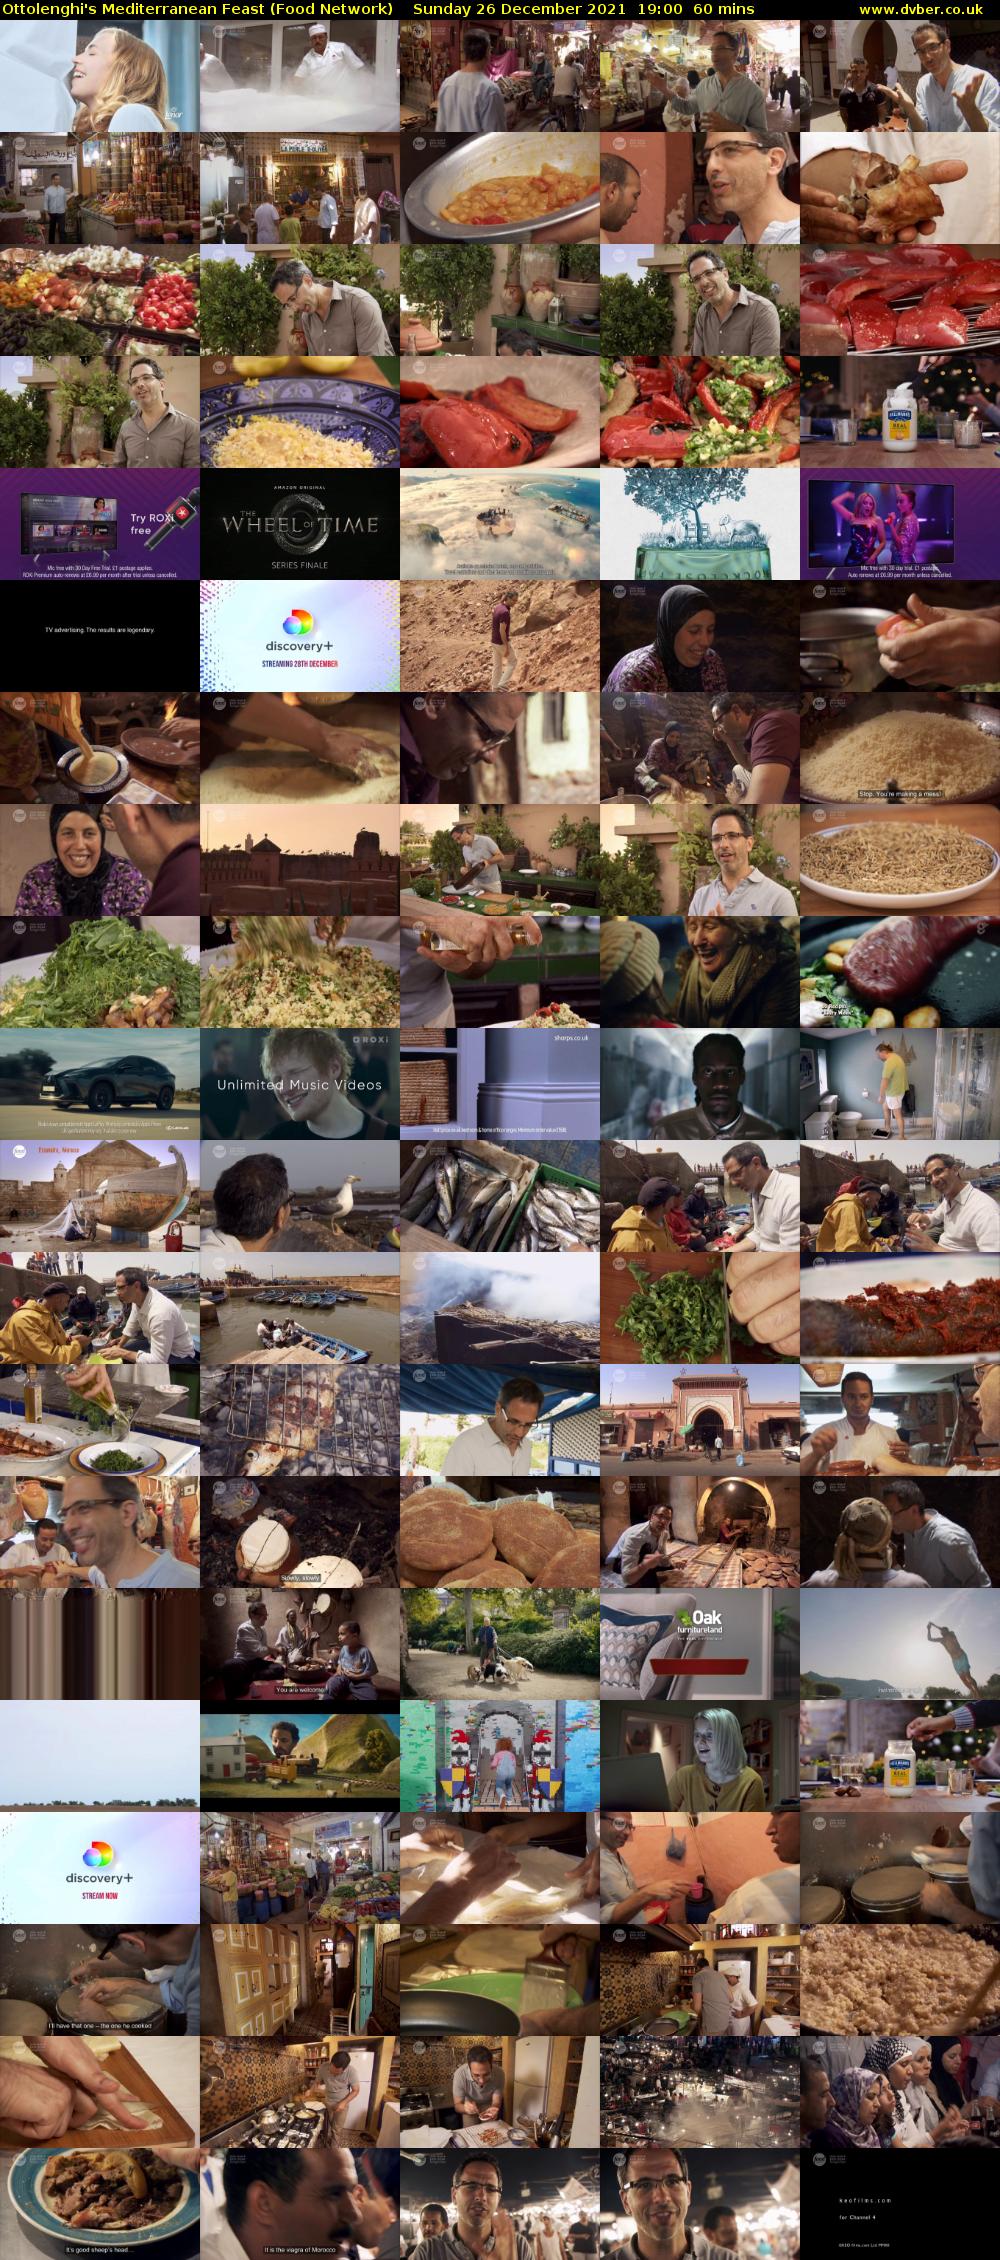 Ottolenghi's Mediterranean Feast (Food Network) Sunday 26 December 2021 19:00 - 20:00